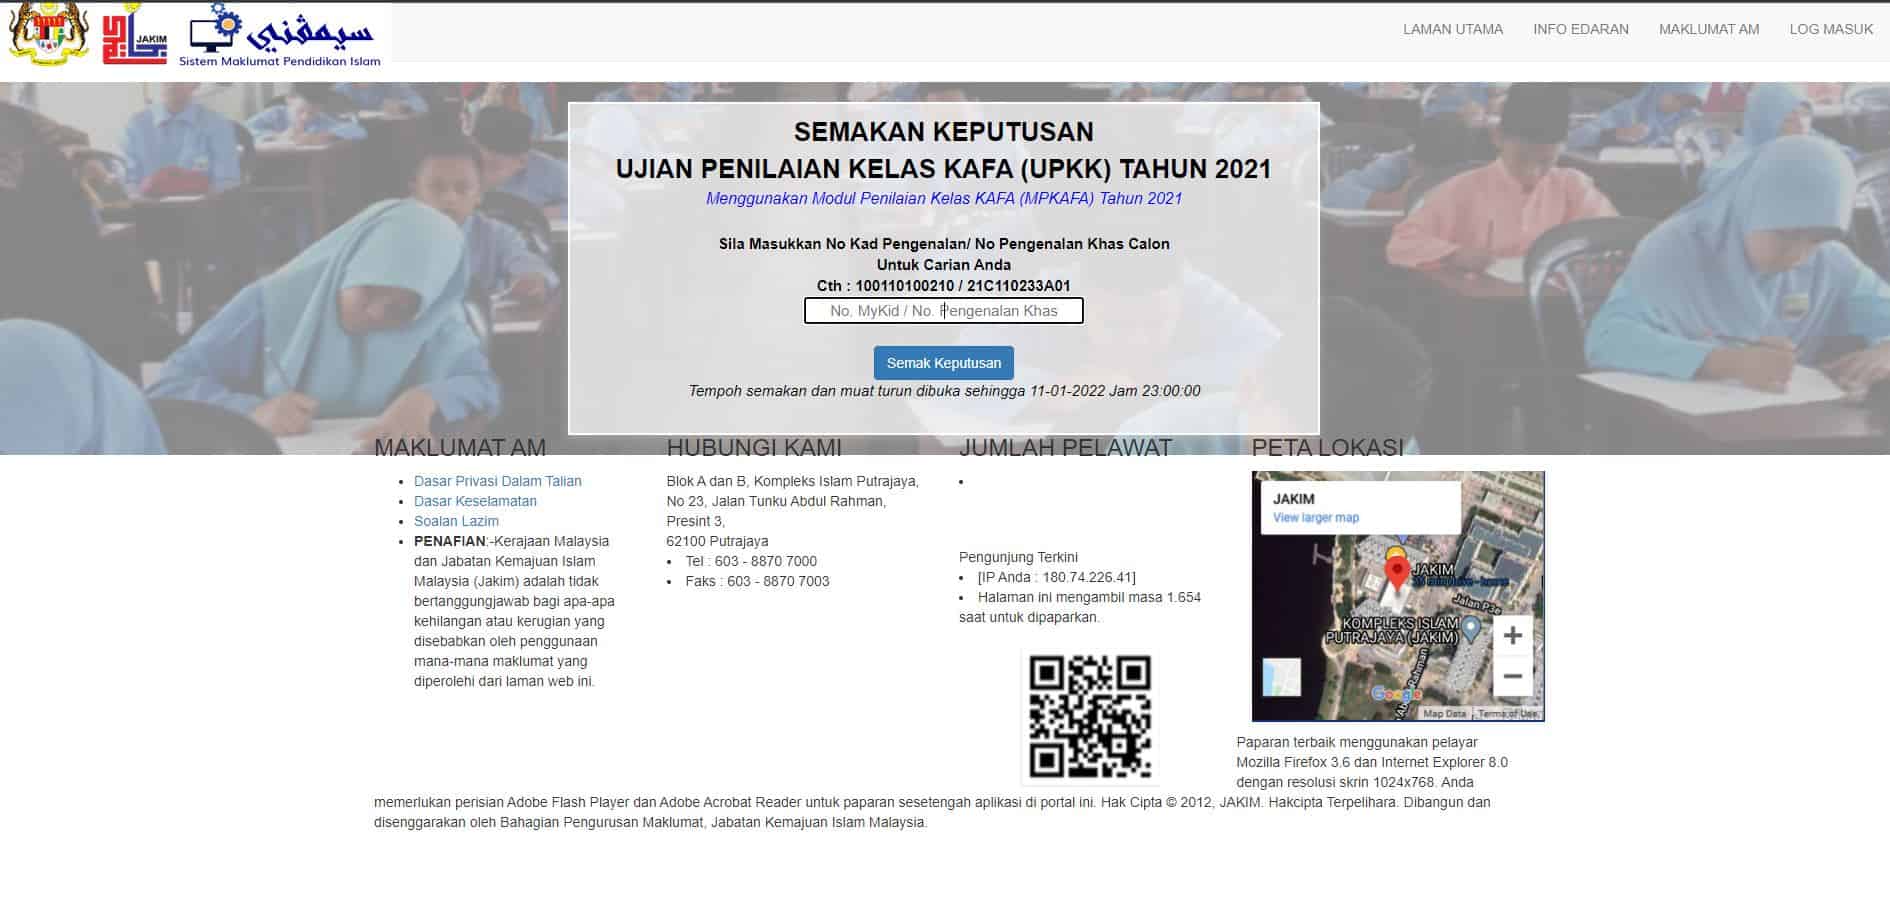 Upkk result online